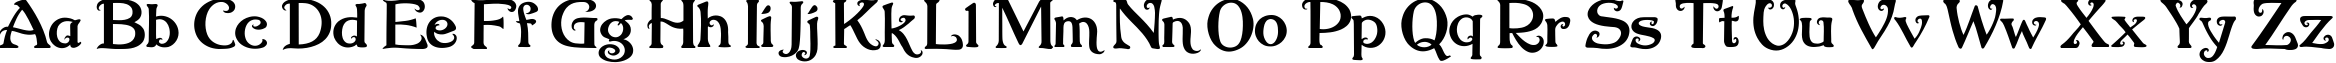 Пример написания английского алфавита шрифтом Nugie Romantic